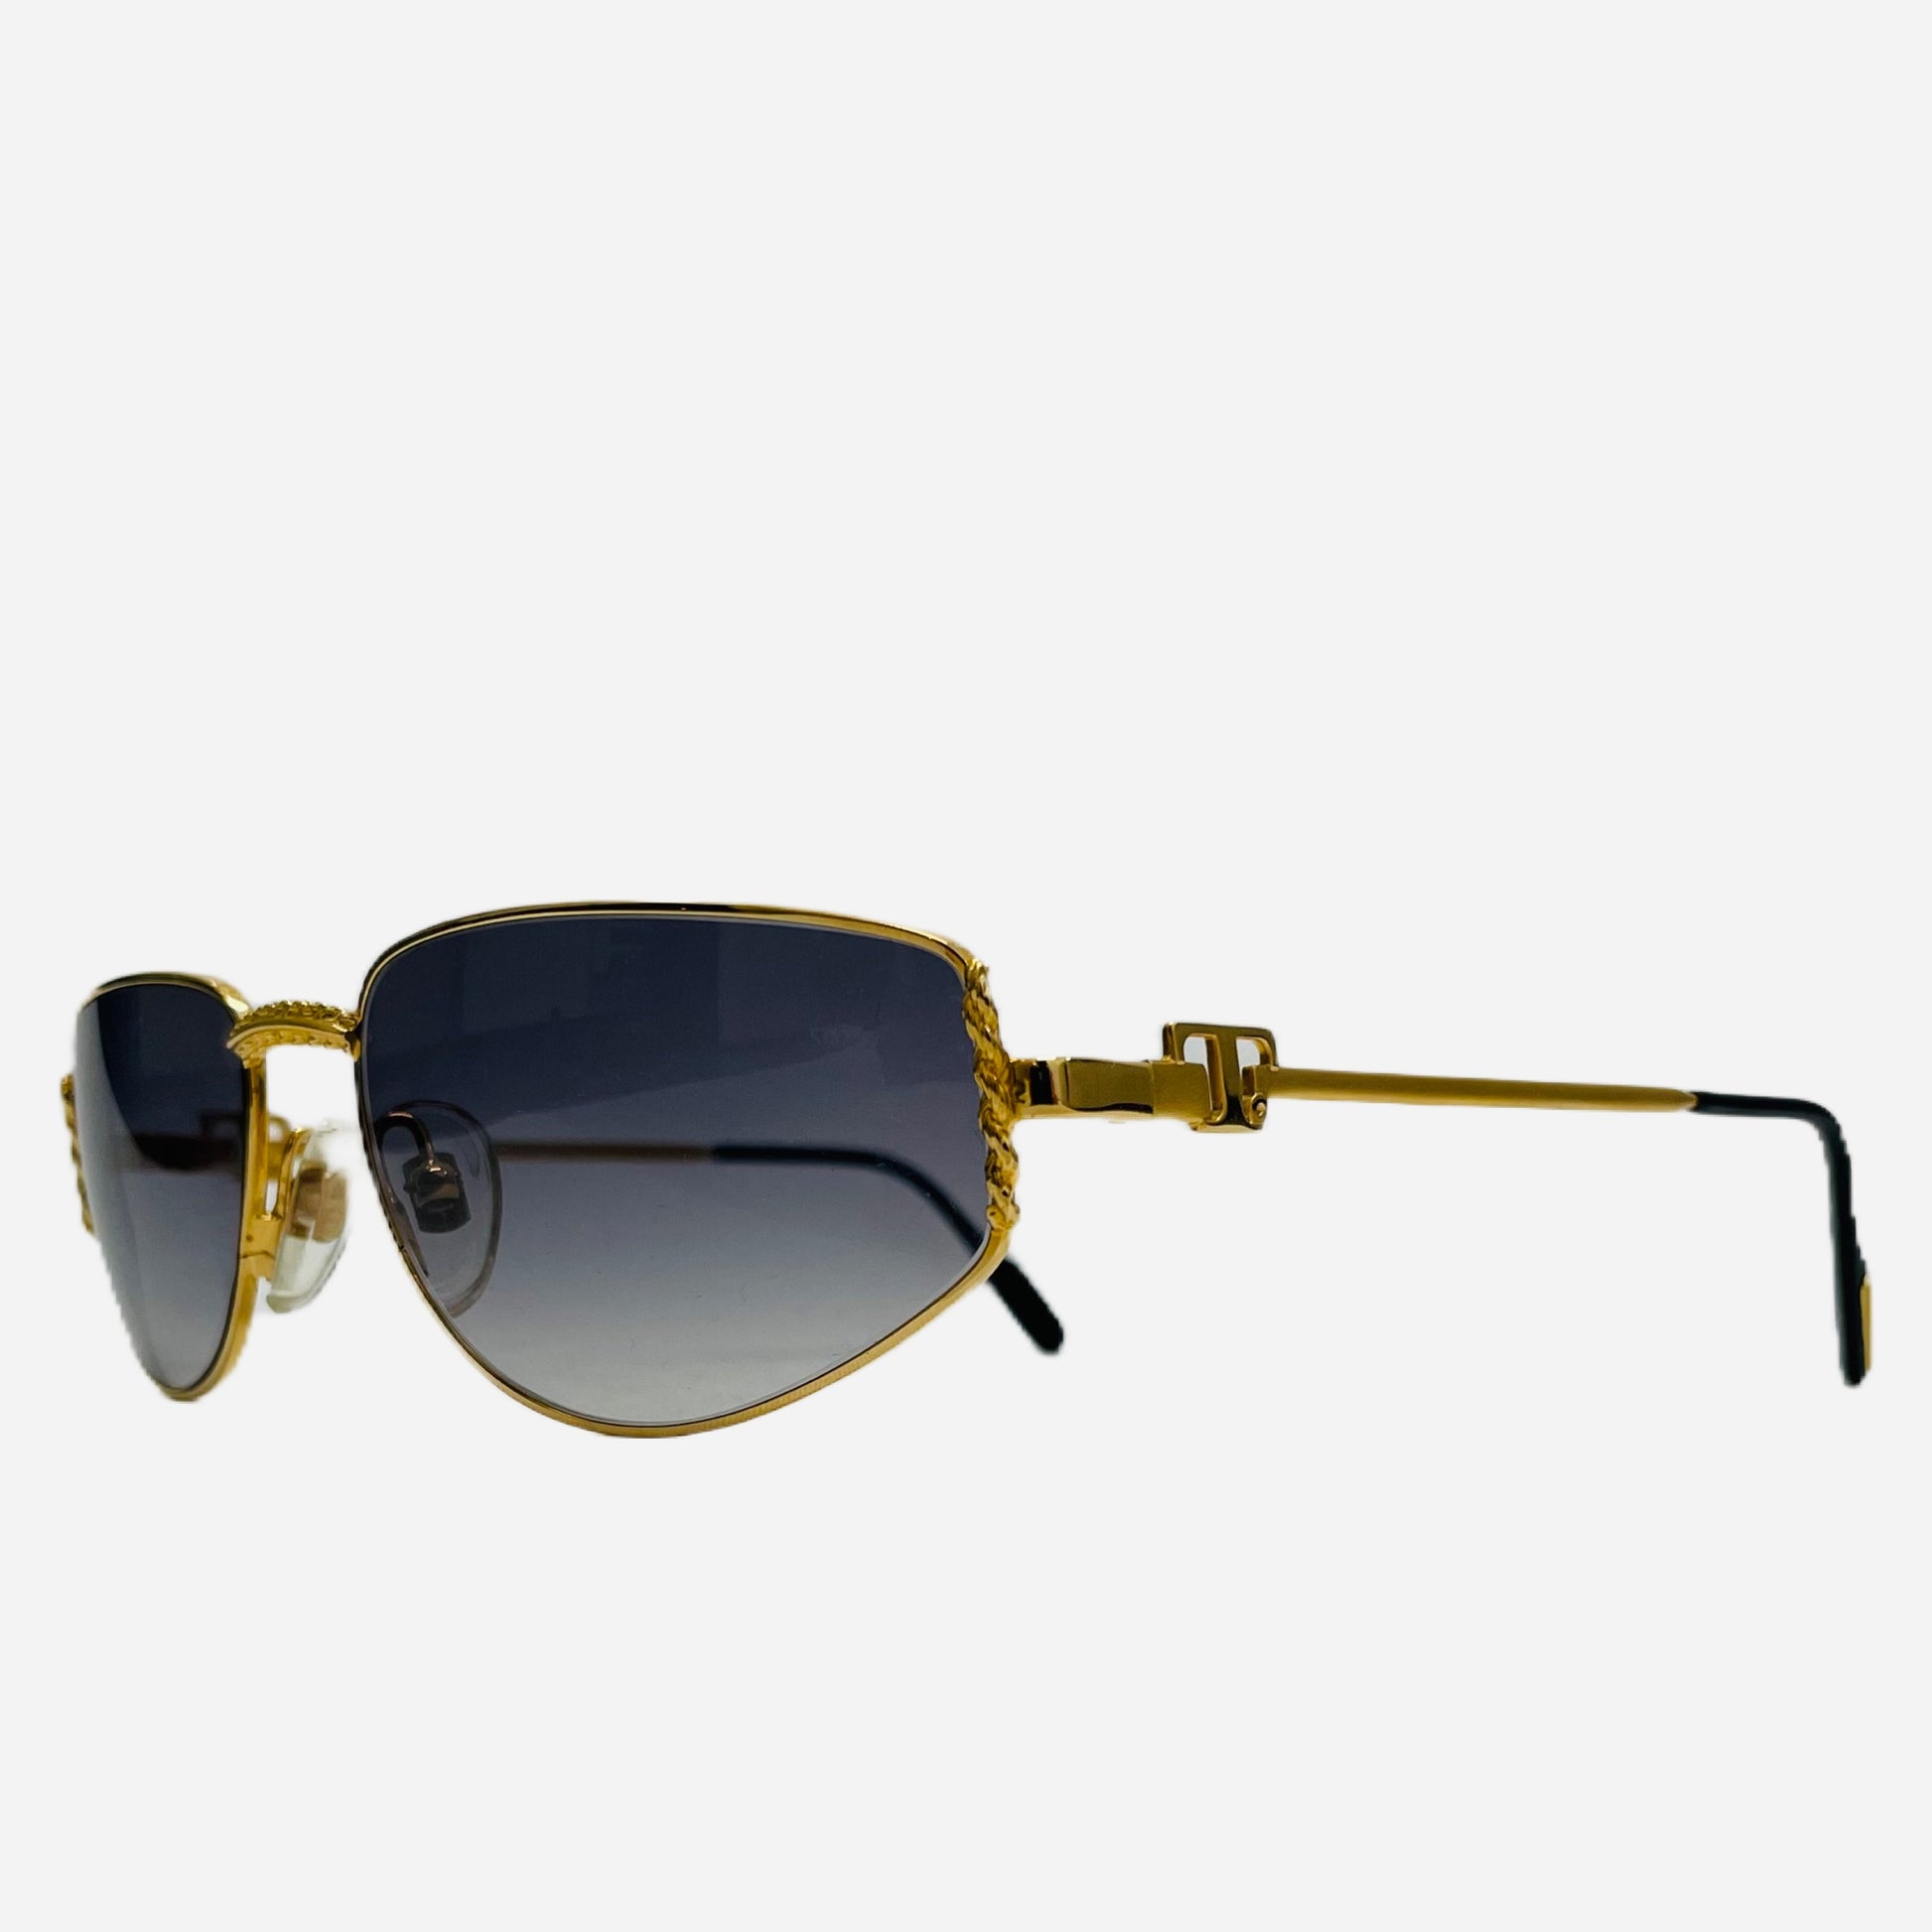 Tiffany-Lunettes-Sonnenbrille-Sunglasses-the-seekers-vintage-designer-sunglasses-23-Carats-Gold-front